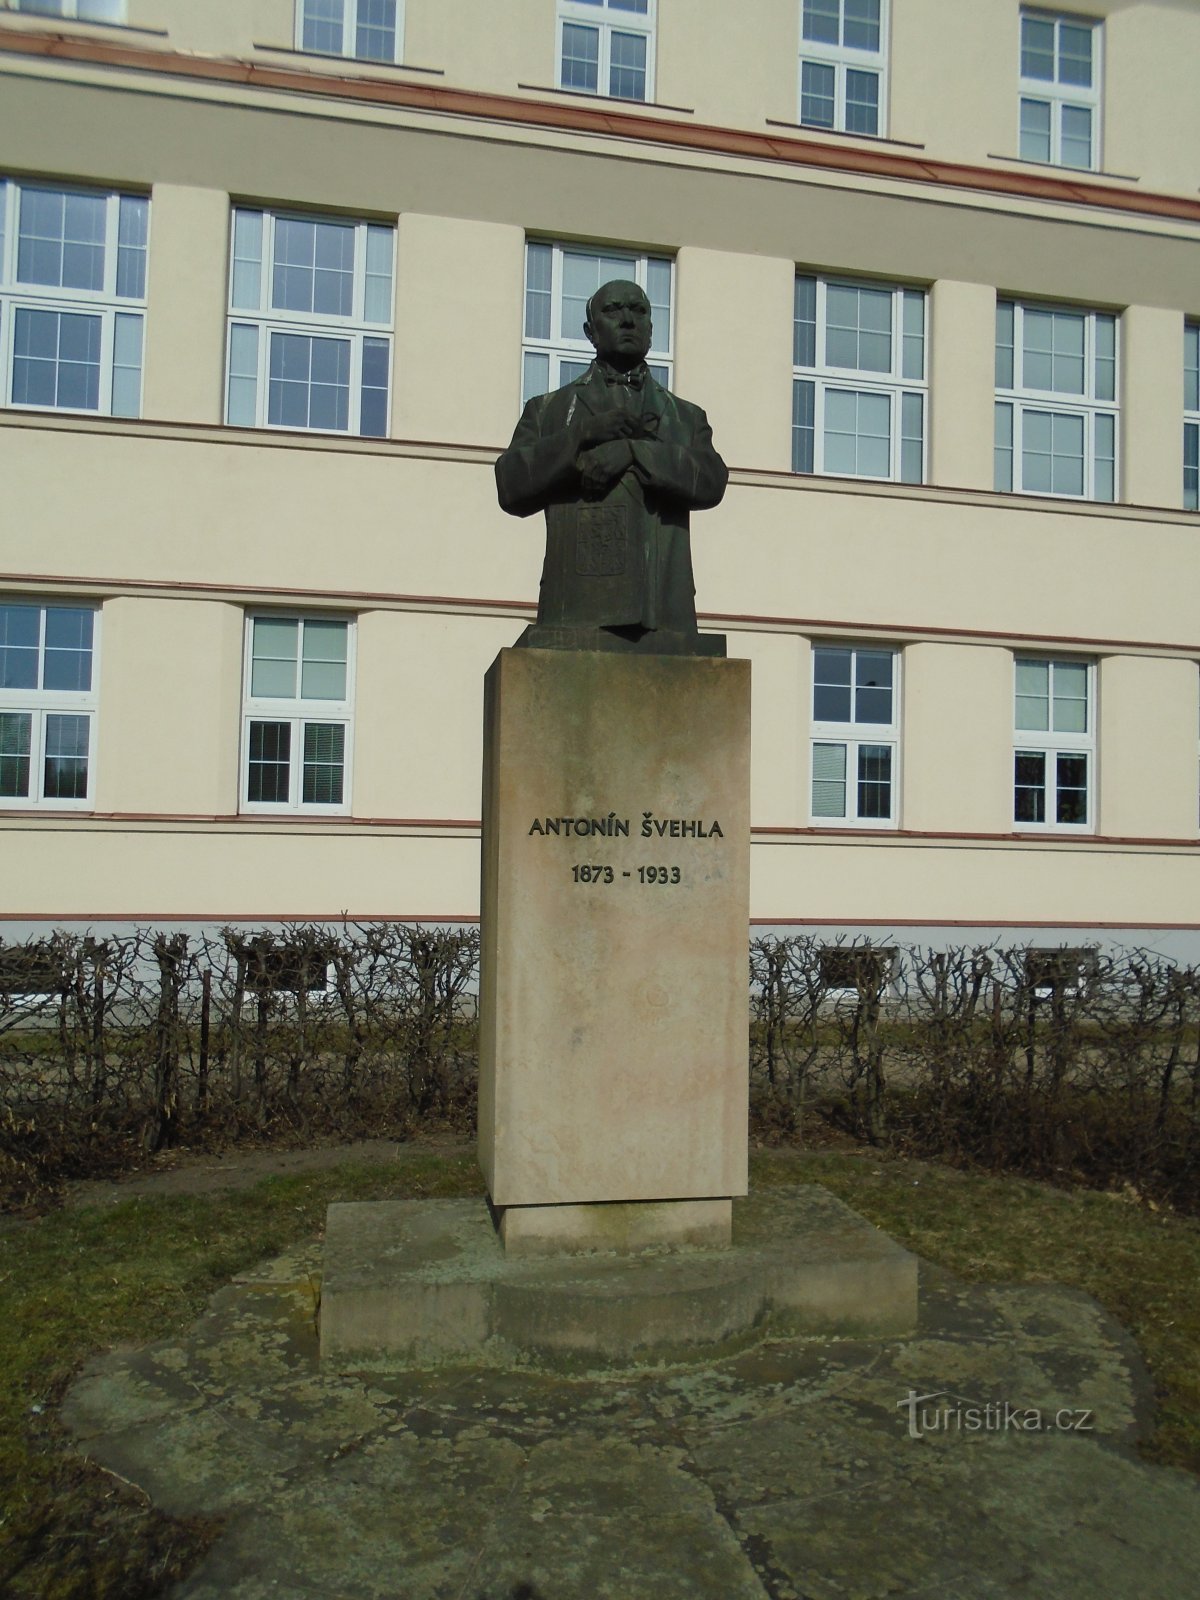 Monument til Antonín Švehla (Hradec Králové, 4.3.2018. marts XNUMX)